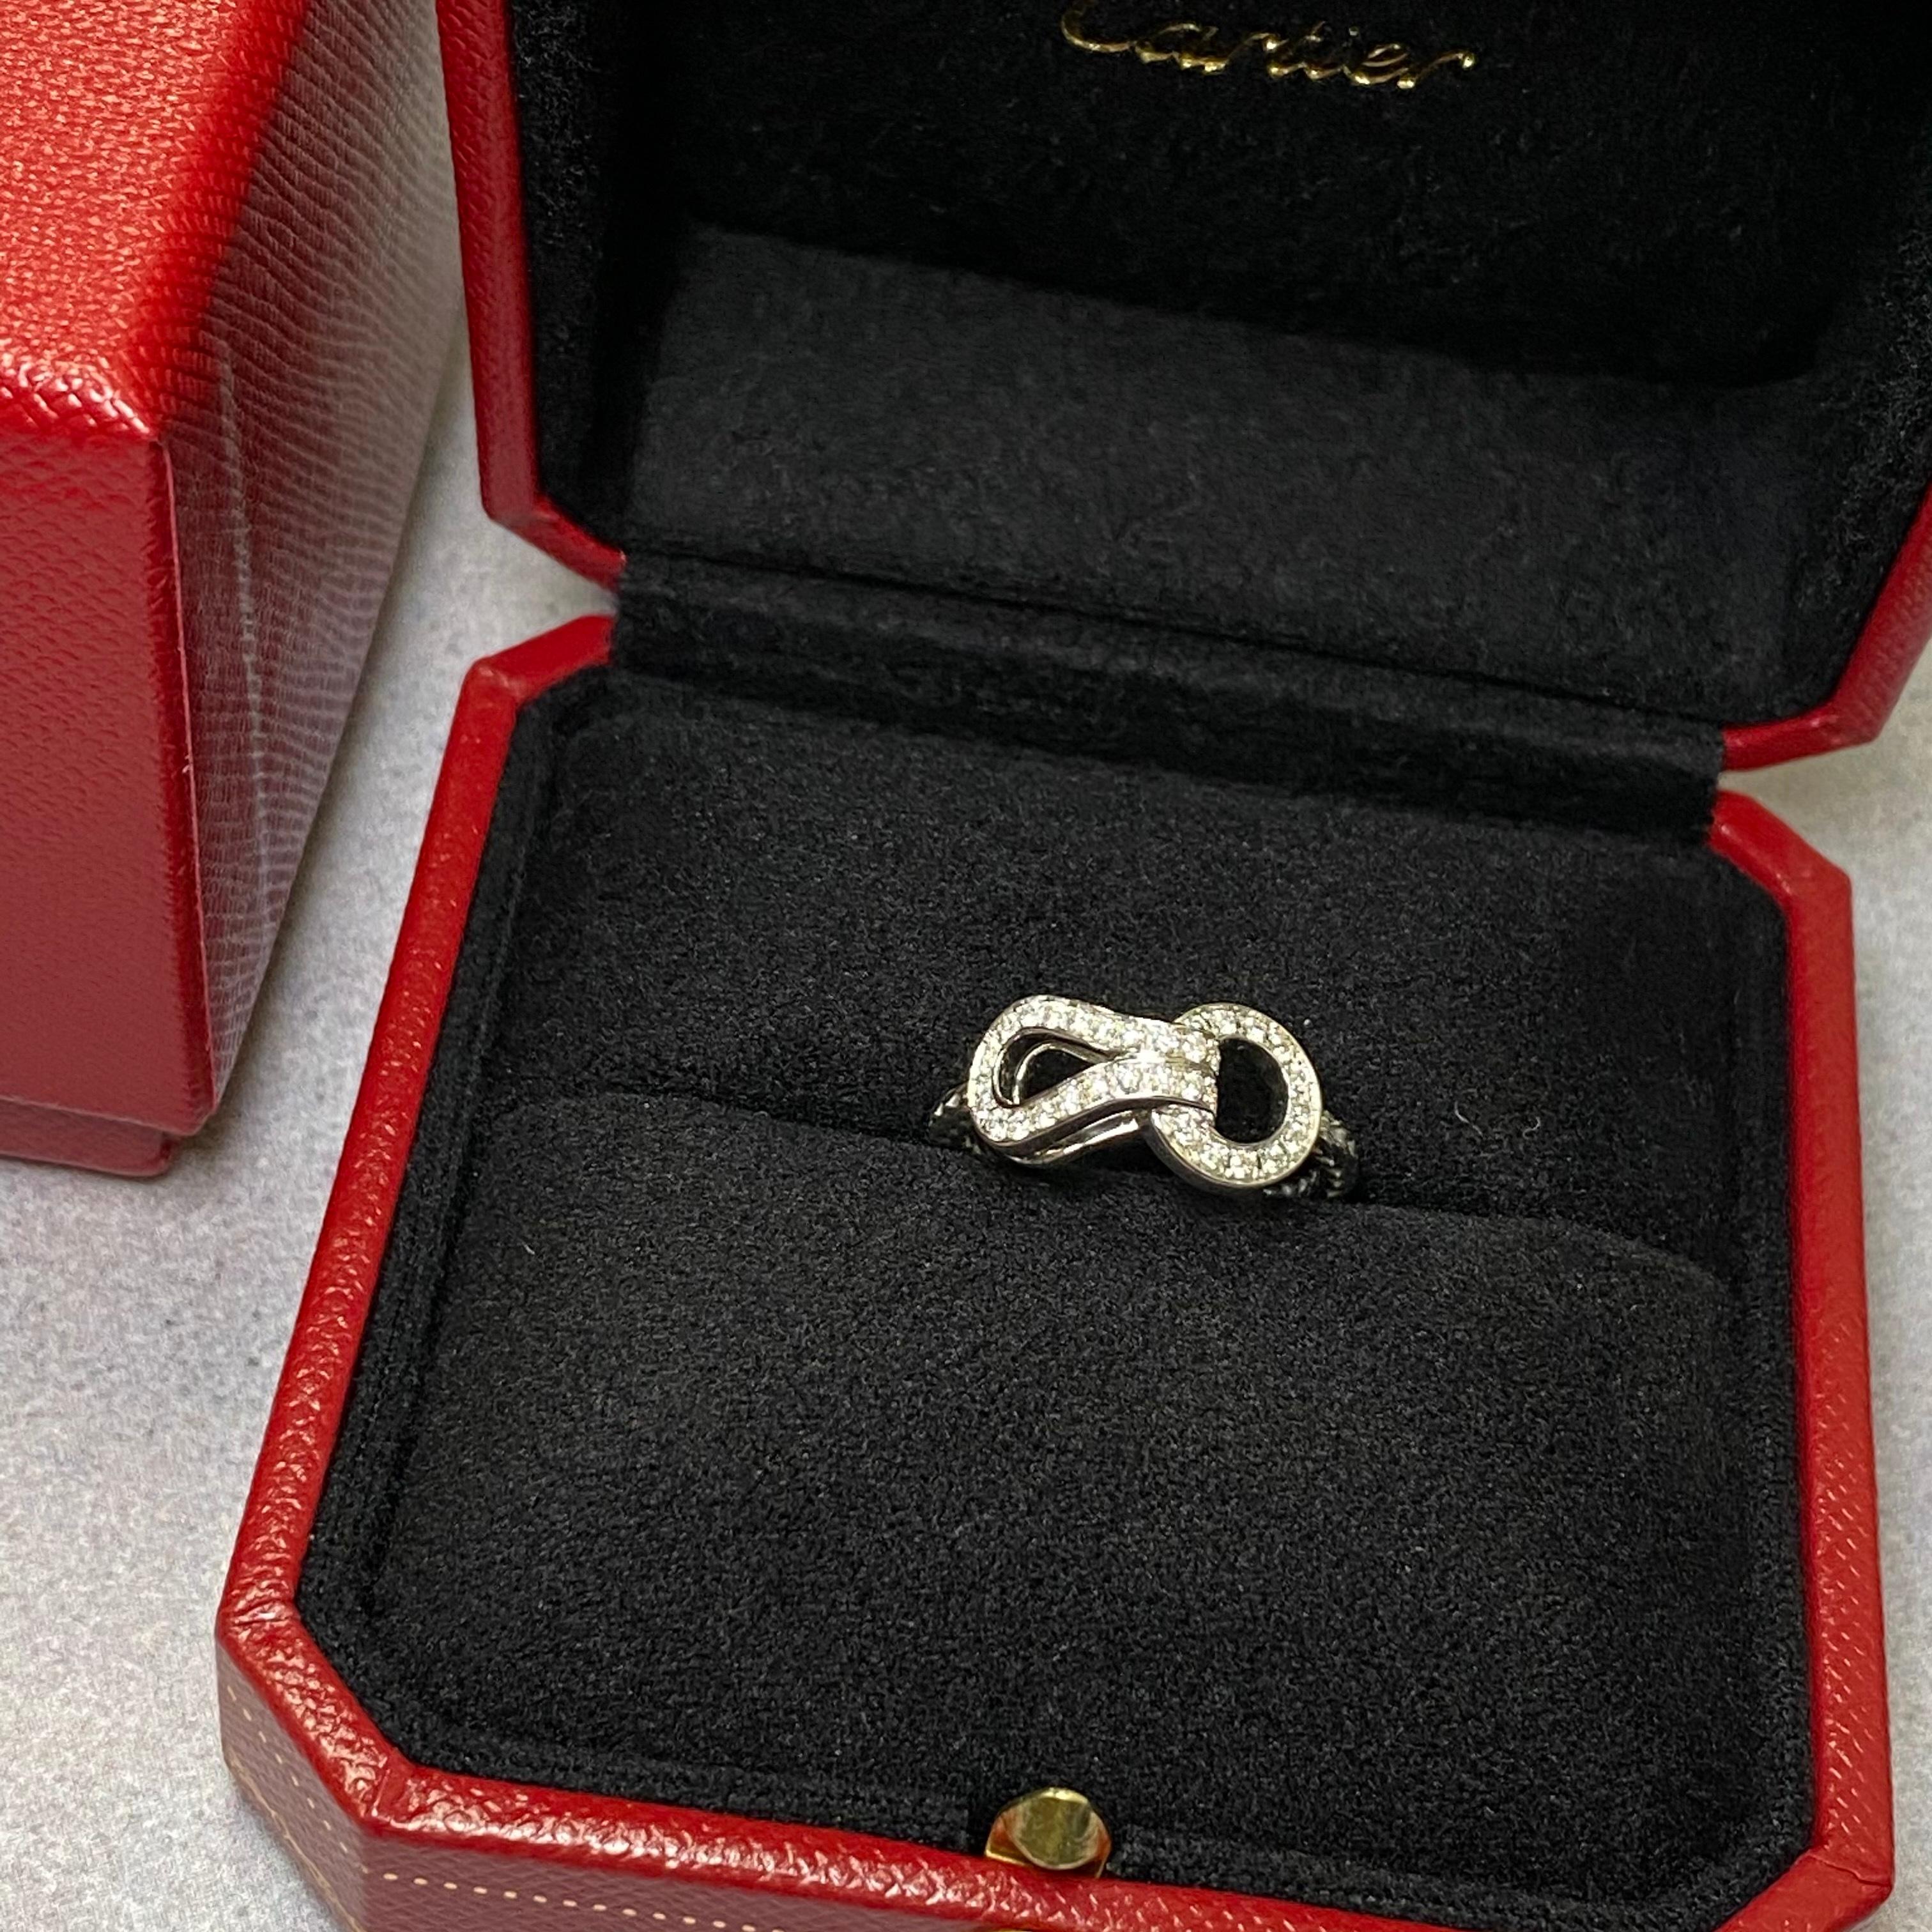 Round Cut Cartier Agrafe Diamond Ladies Ring 18K White Gold 0.23 Cttw